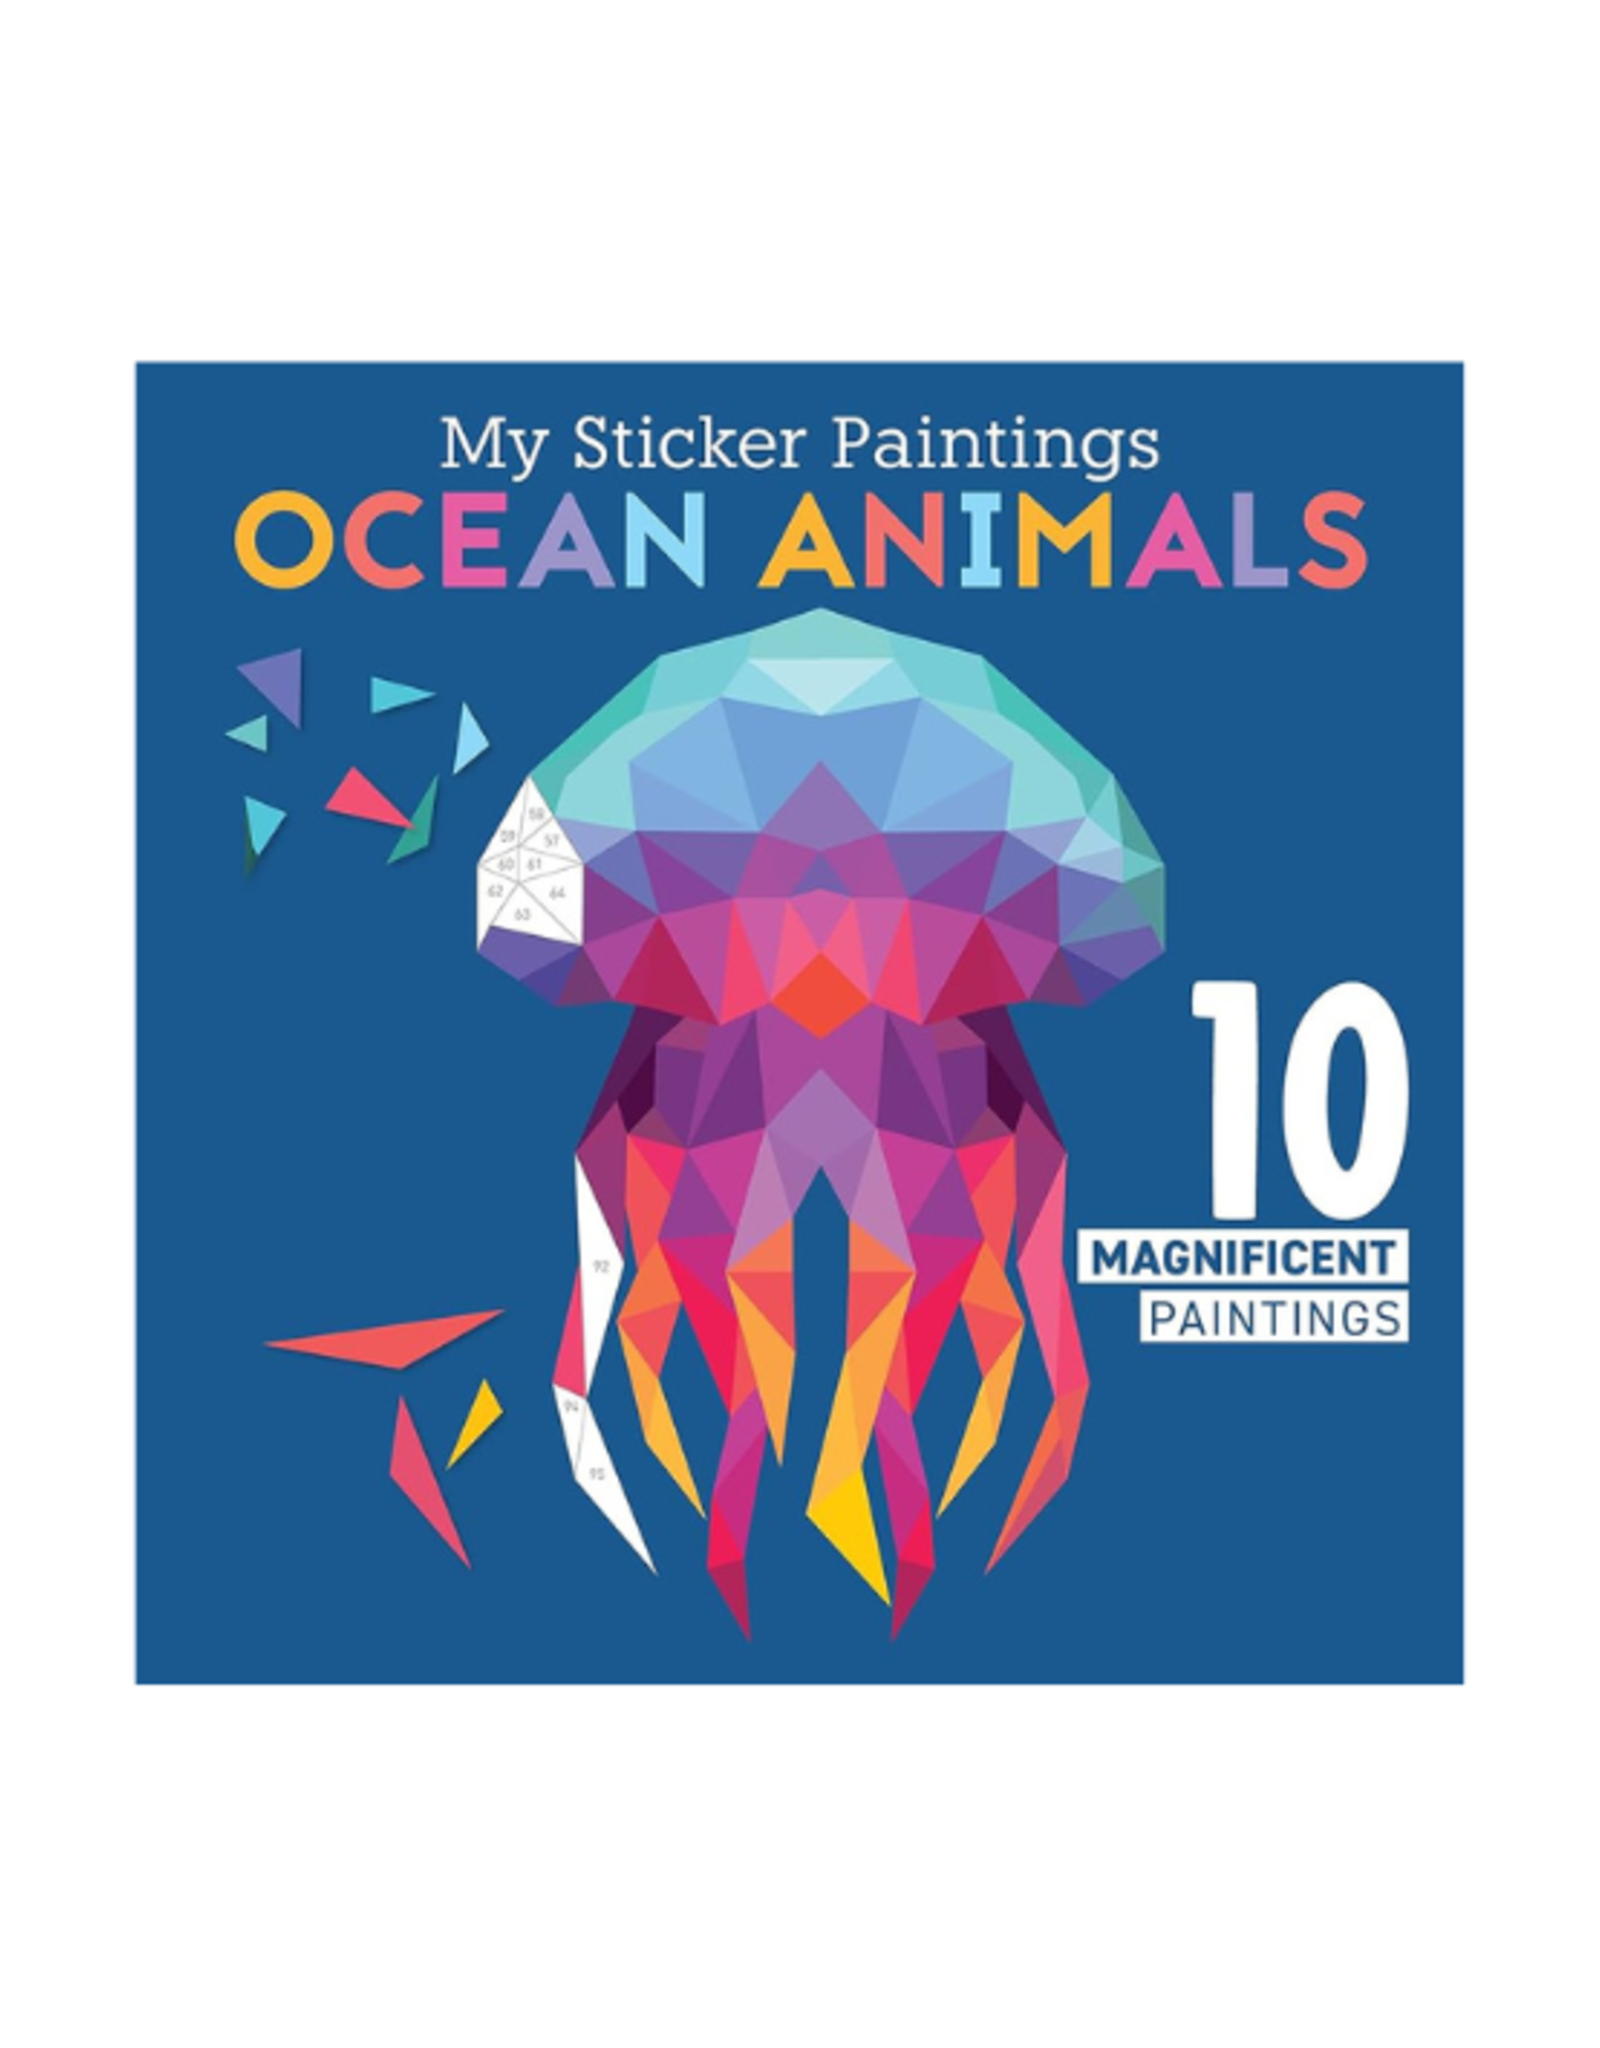 My sticker paintings ocean animals